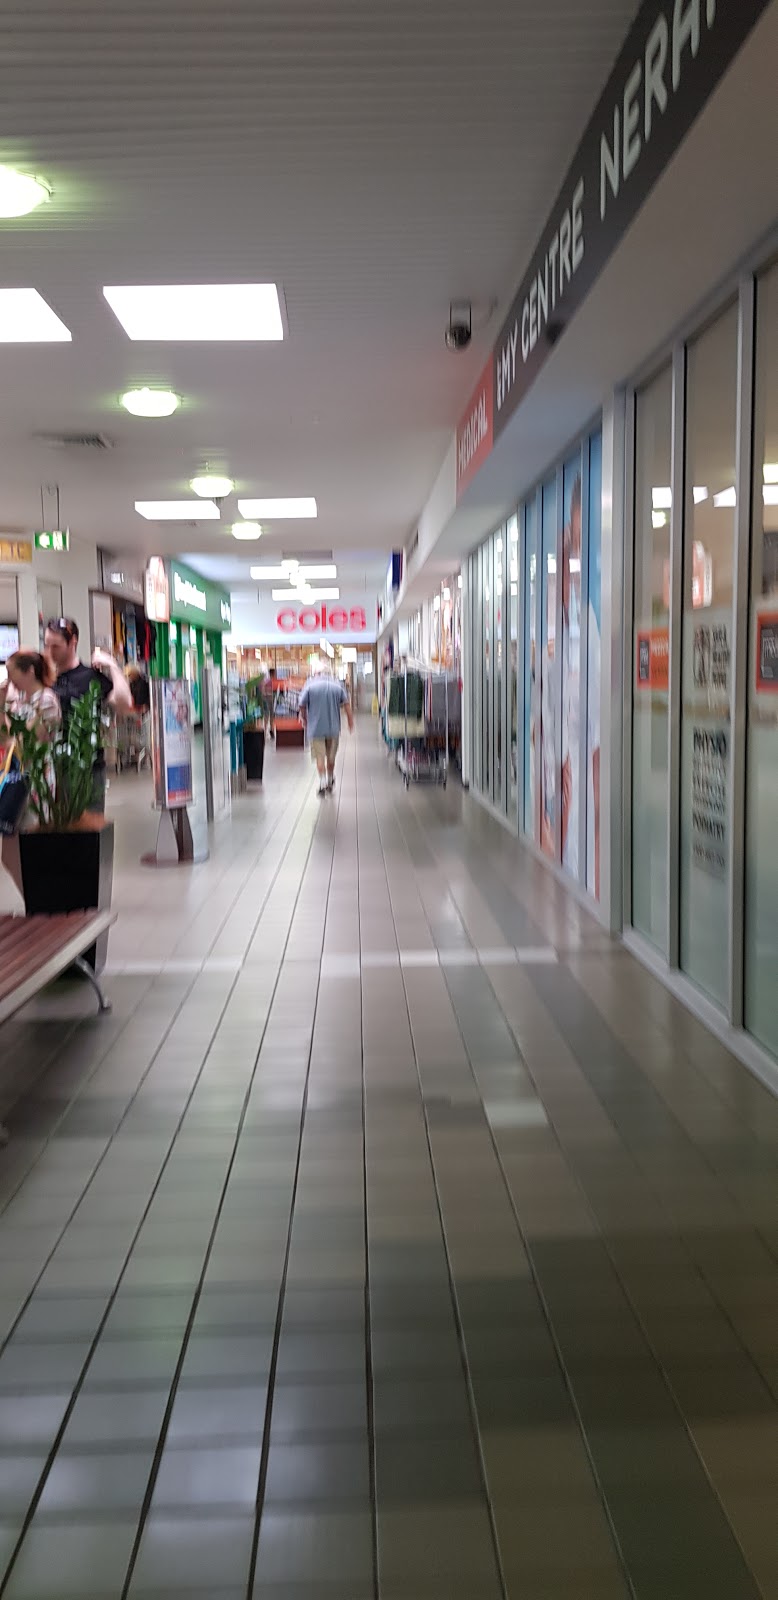 My Centre Nerang | shopping mall | 57 Station St, Nerang QLD 4211, Australia | 0755783199 OR +61 7 5578 3199